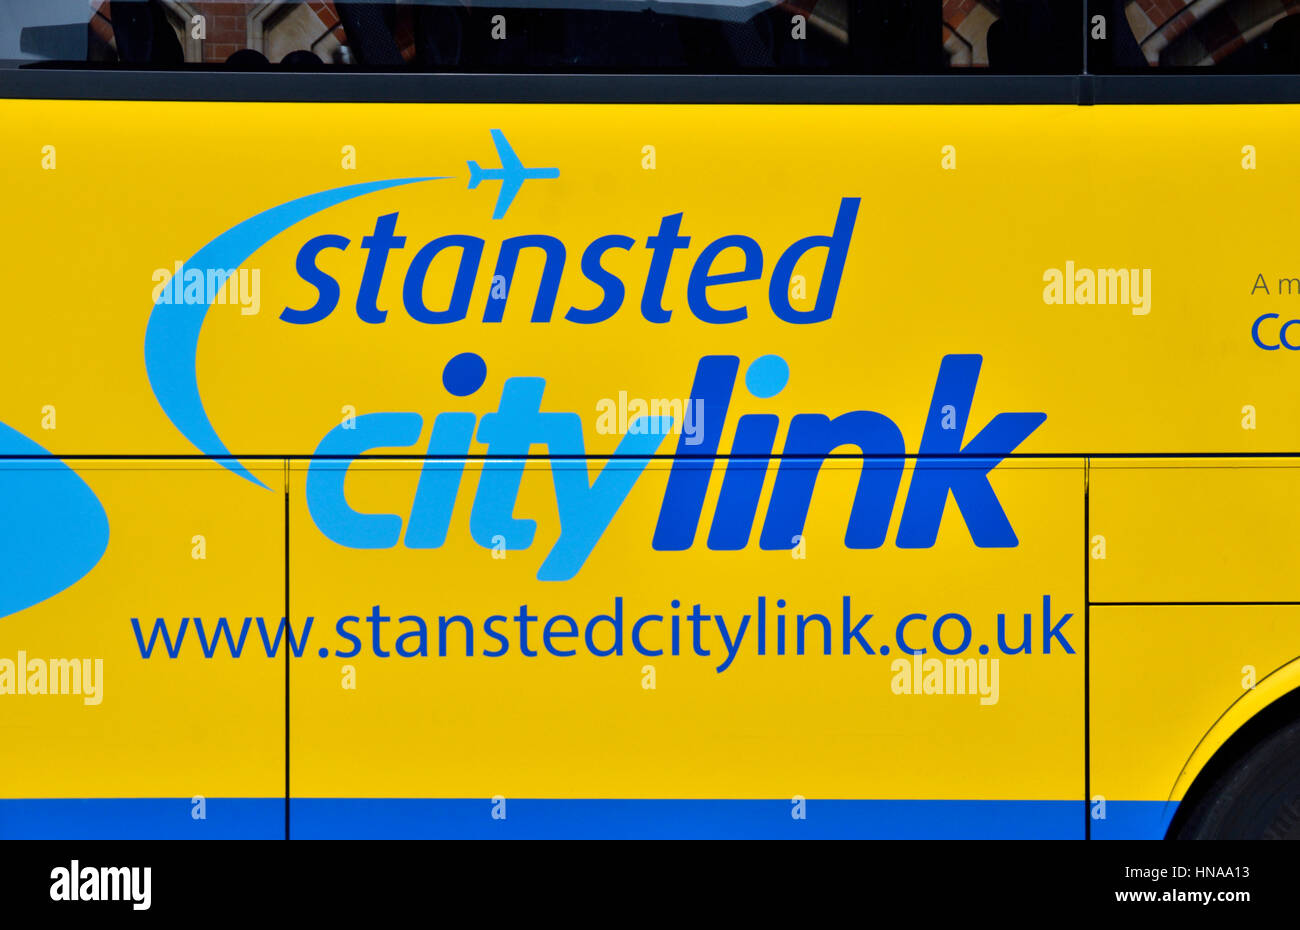 Stansted Citylink coach close-up, Londres, Royaume-Uni. Banque D'Images